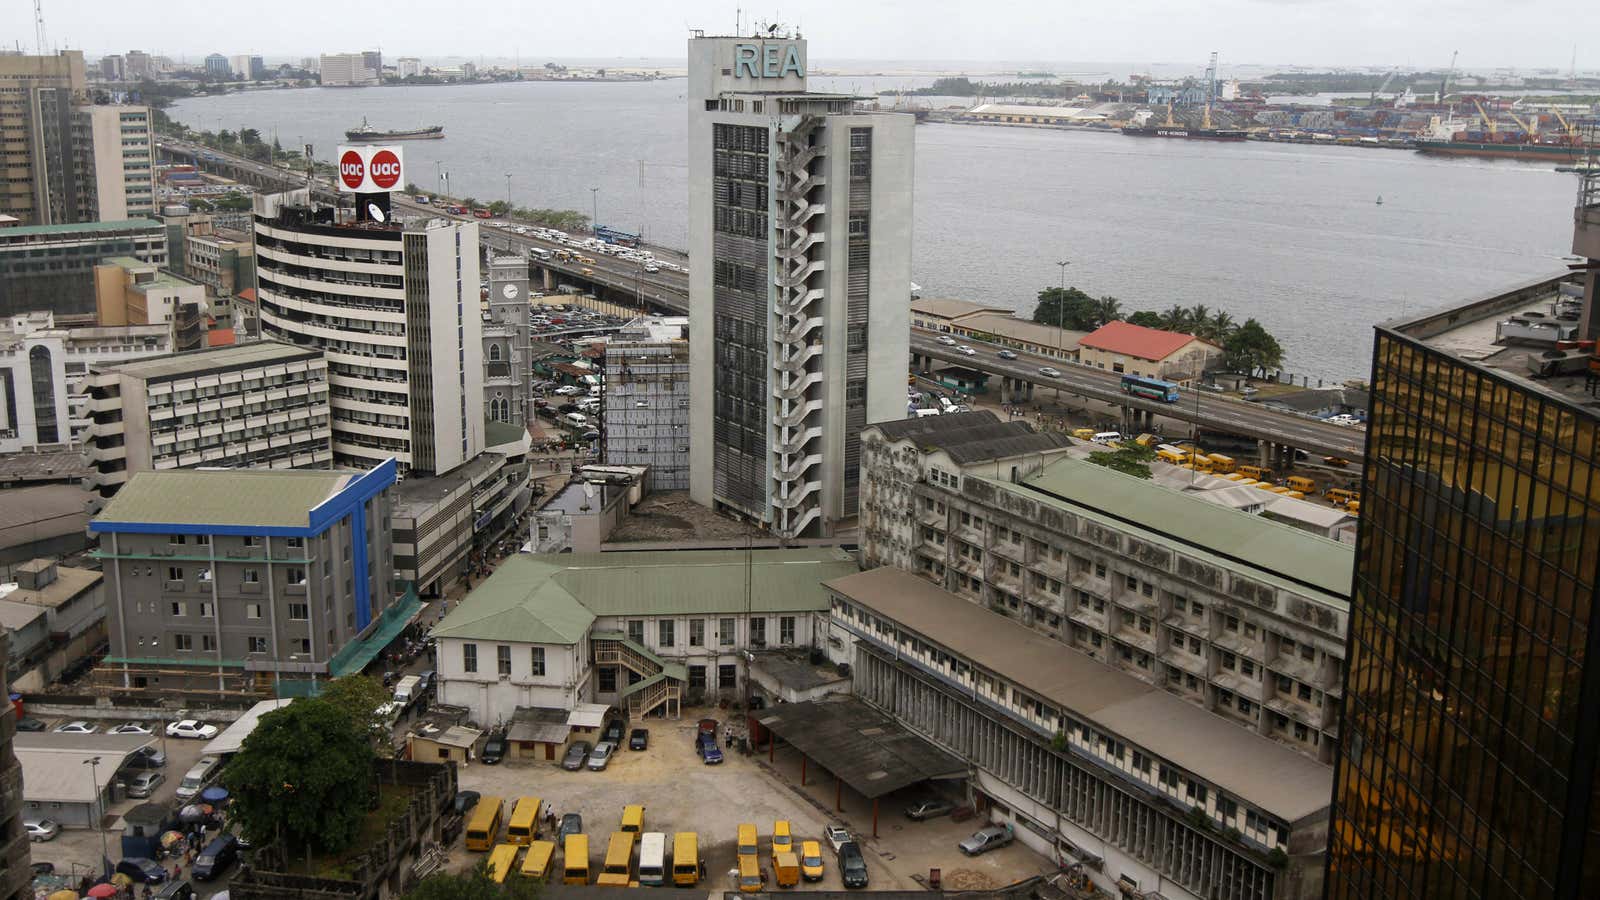 Lagos, Nigeria’s commercial capital